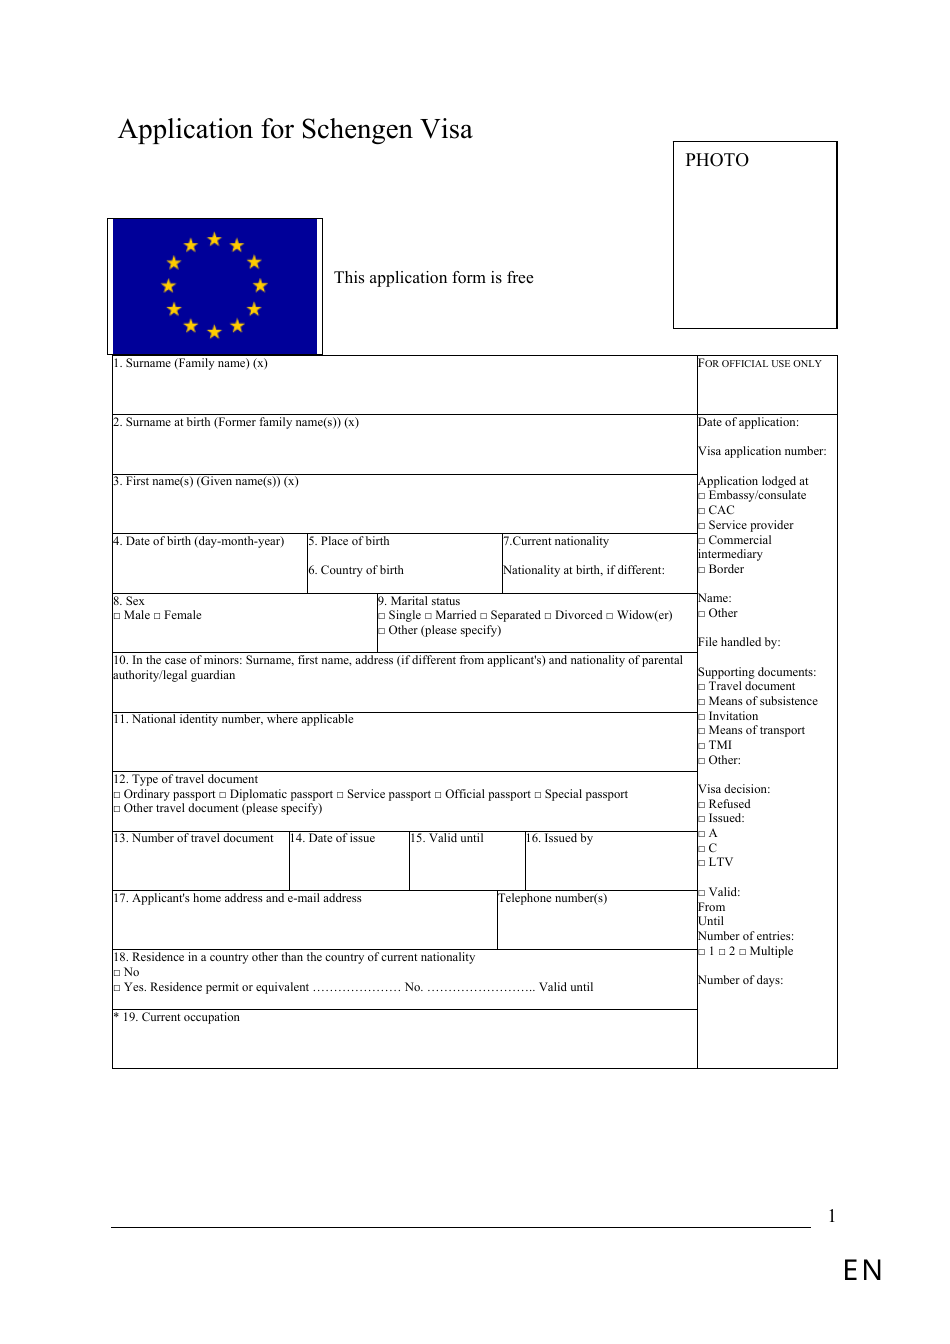 Schengen Visa Application Form - Luxembourg, Page 1